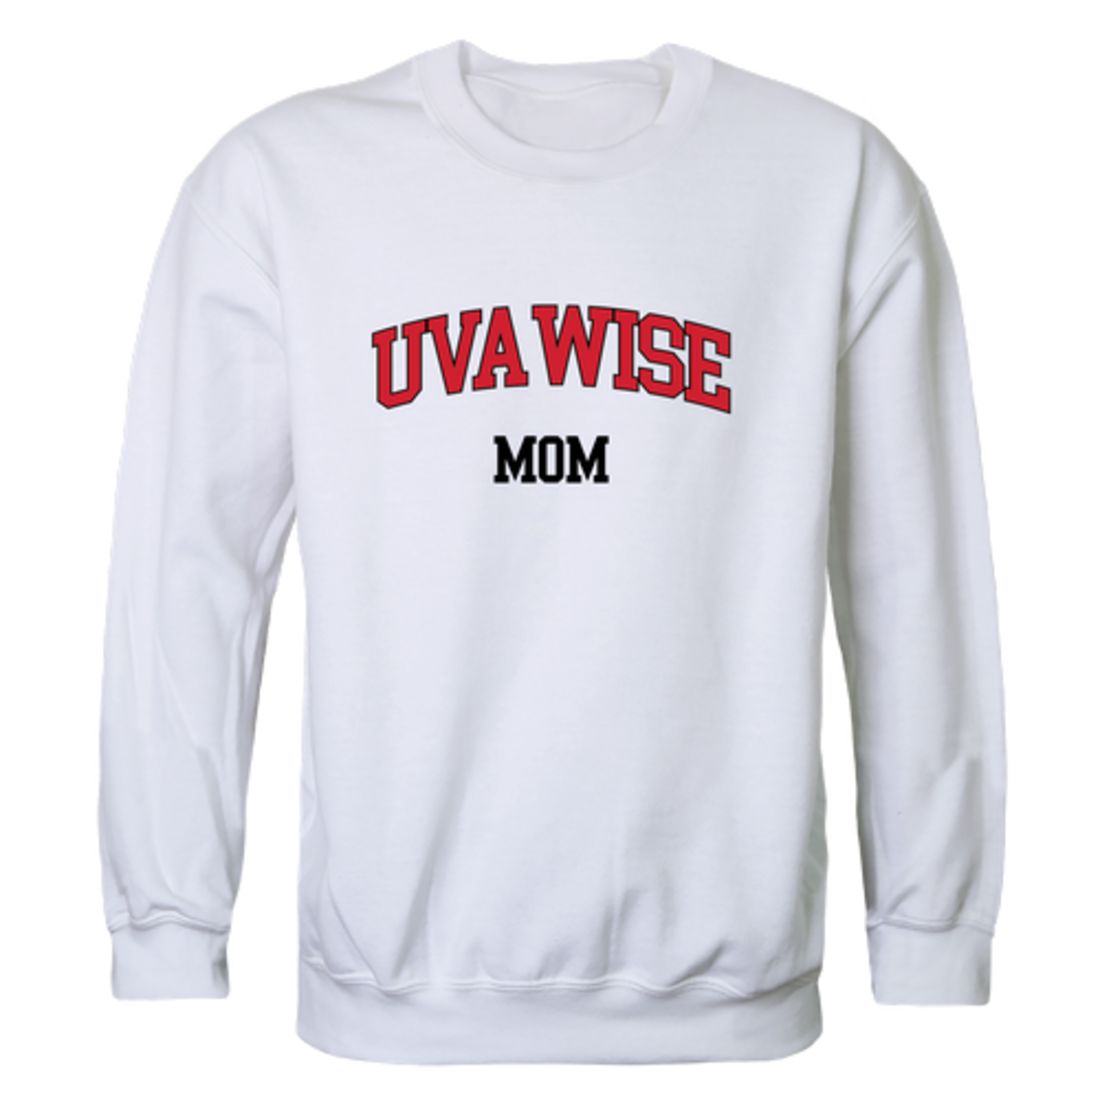 University of Virginia's College at Wise Cavaliers Mom Fleece Crewneck Pullover Sweatshirt